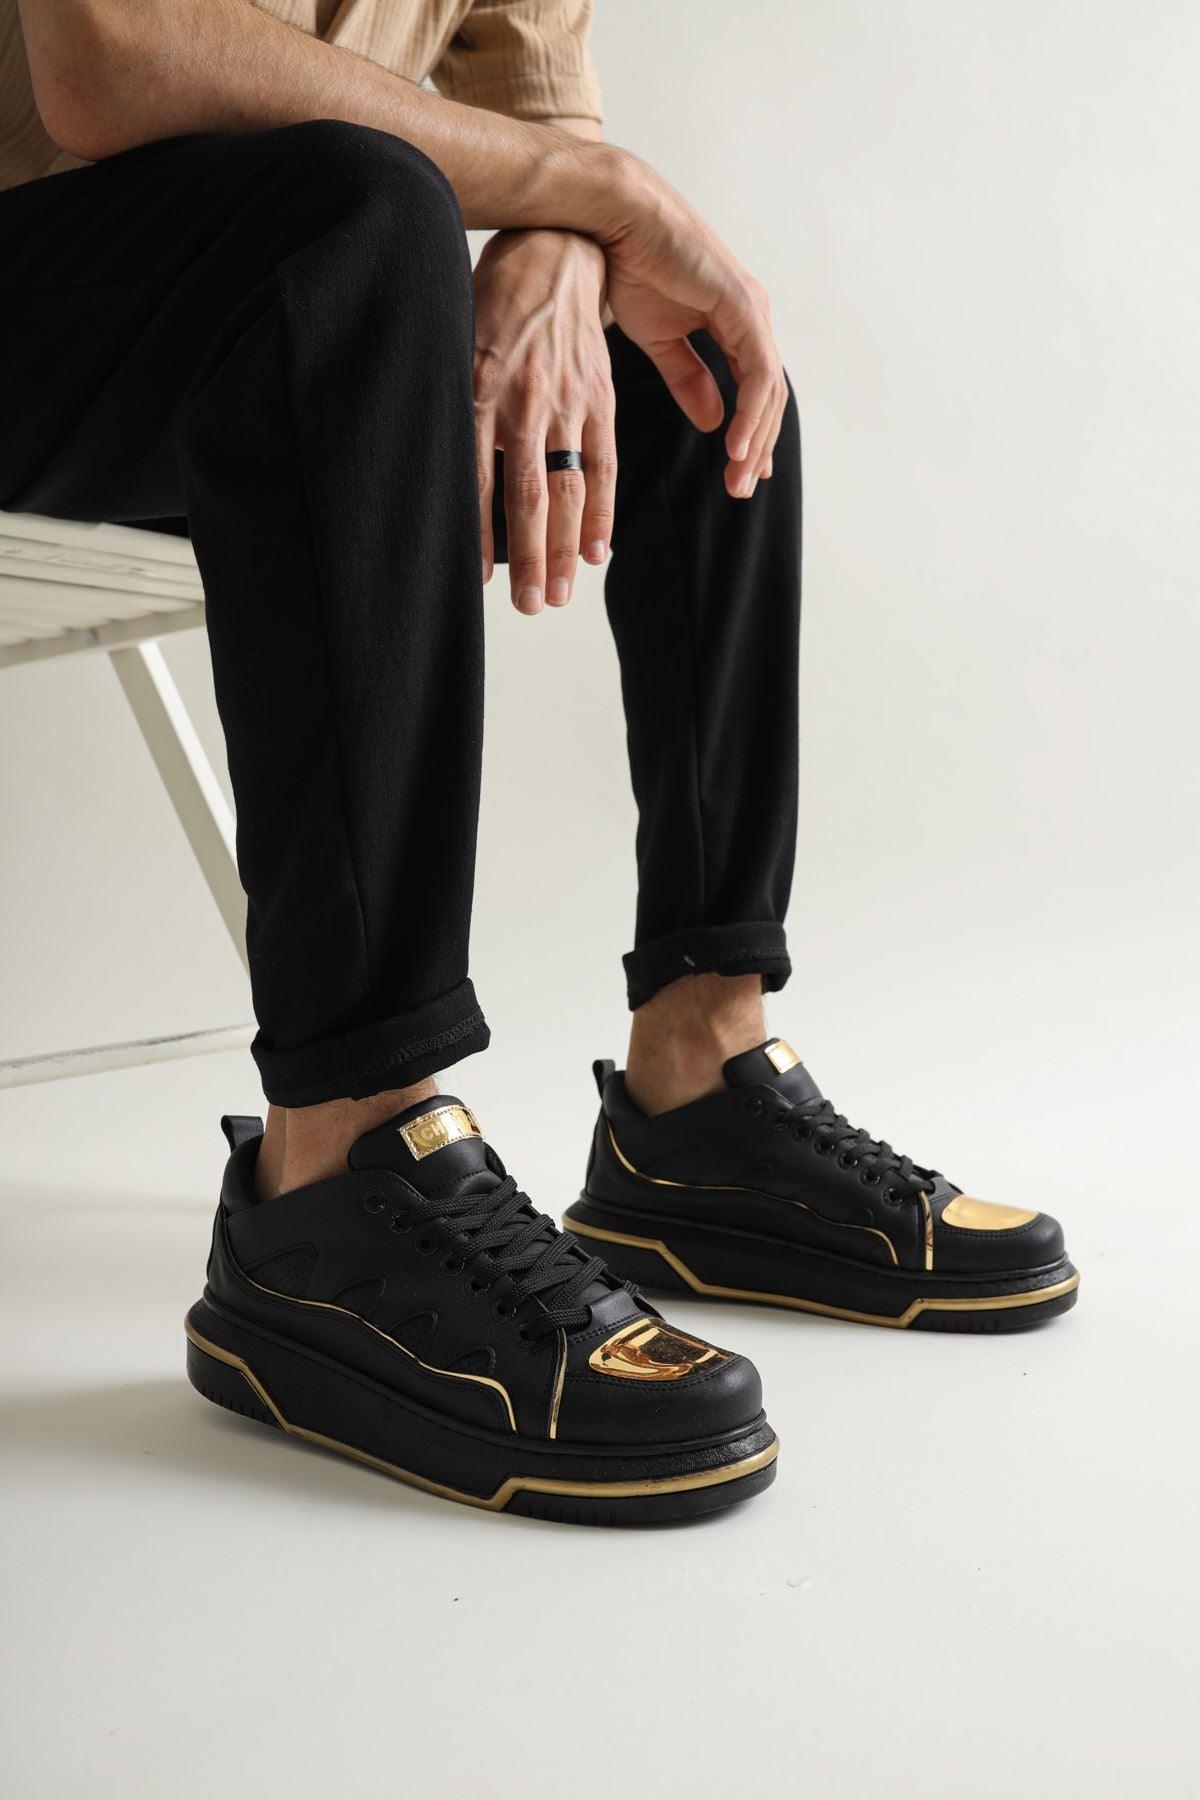 CH183 ST Men's Shoes BLACK/GOLD - STREET MODE ™